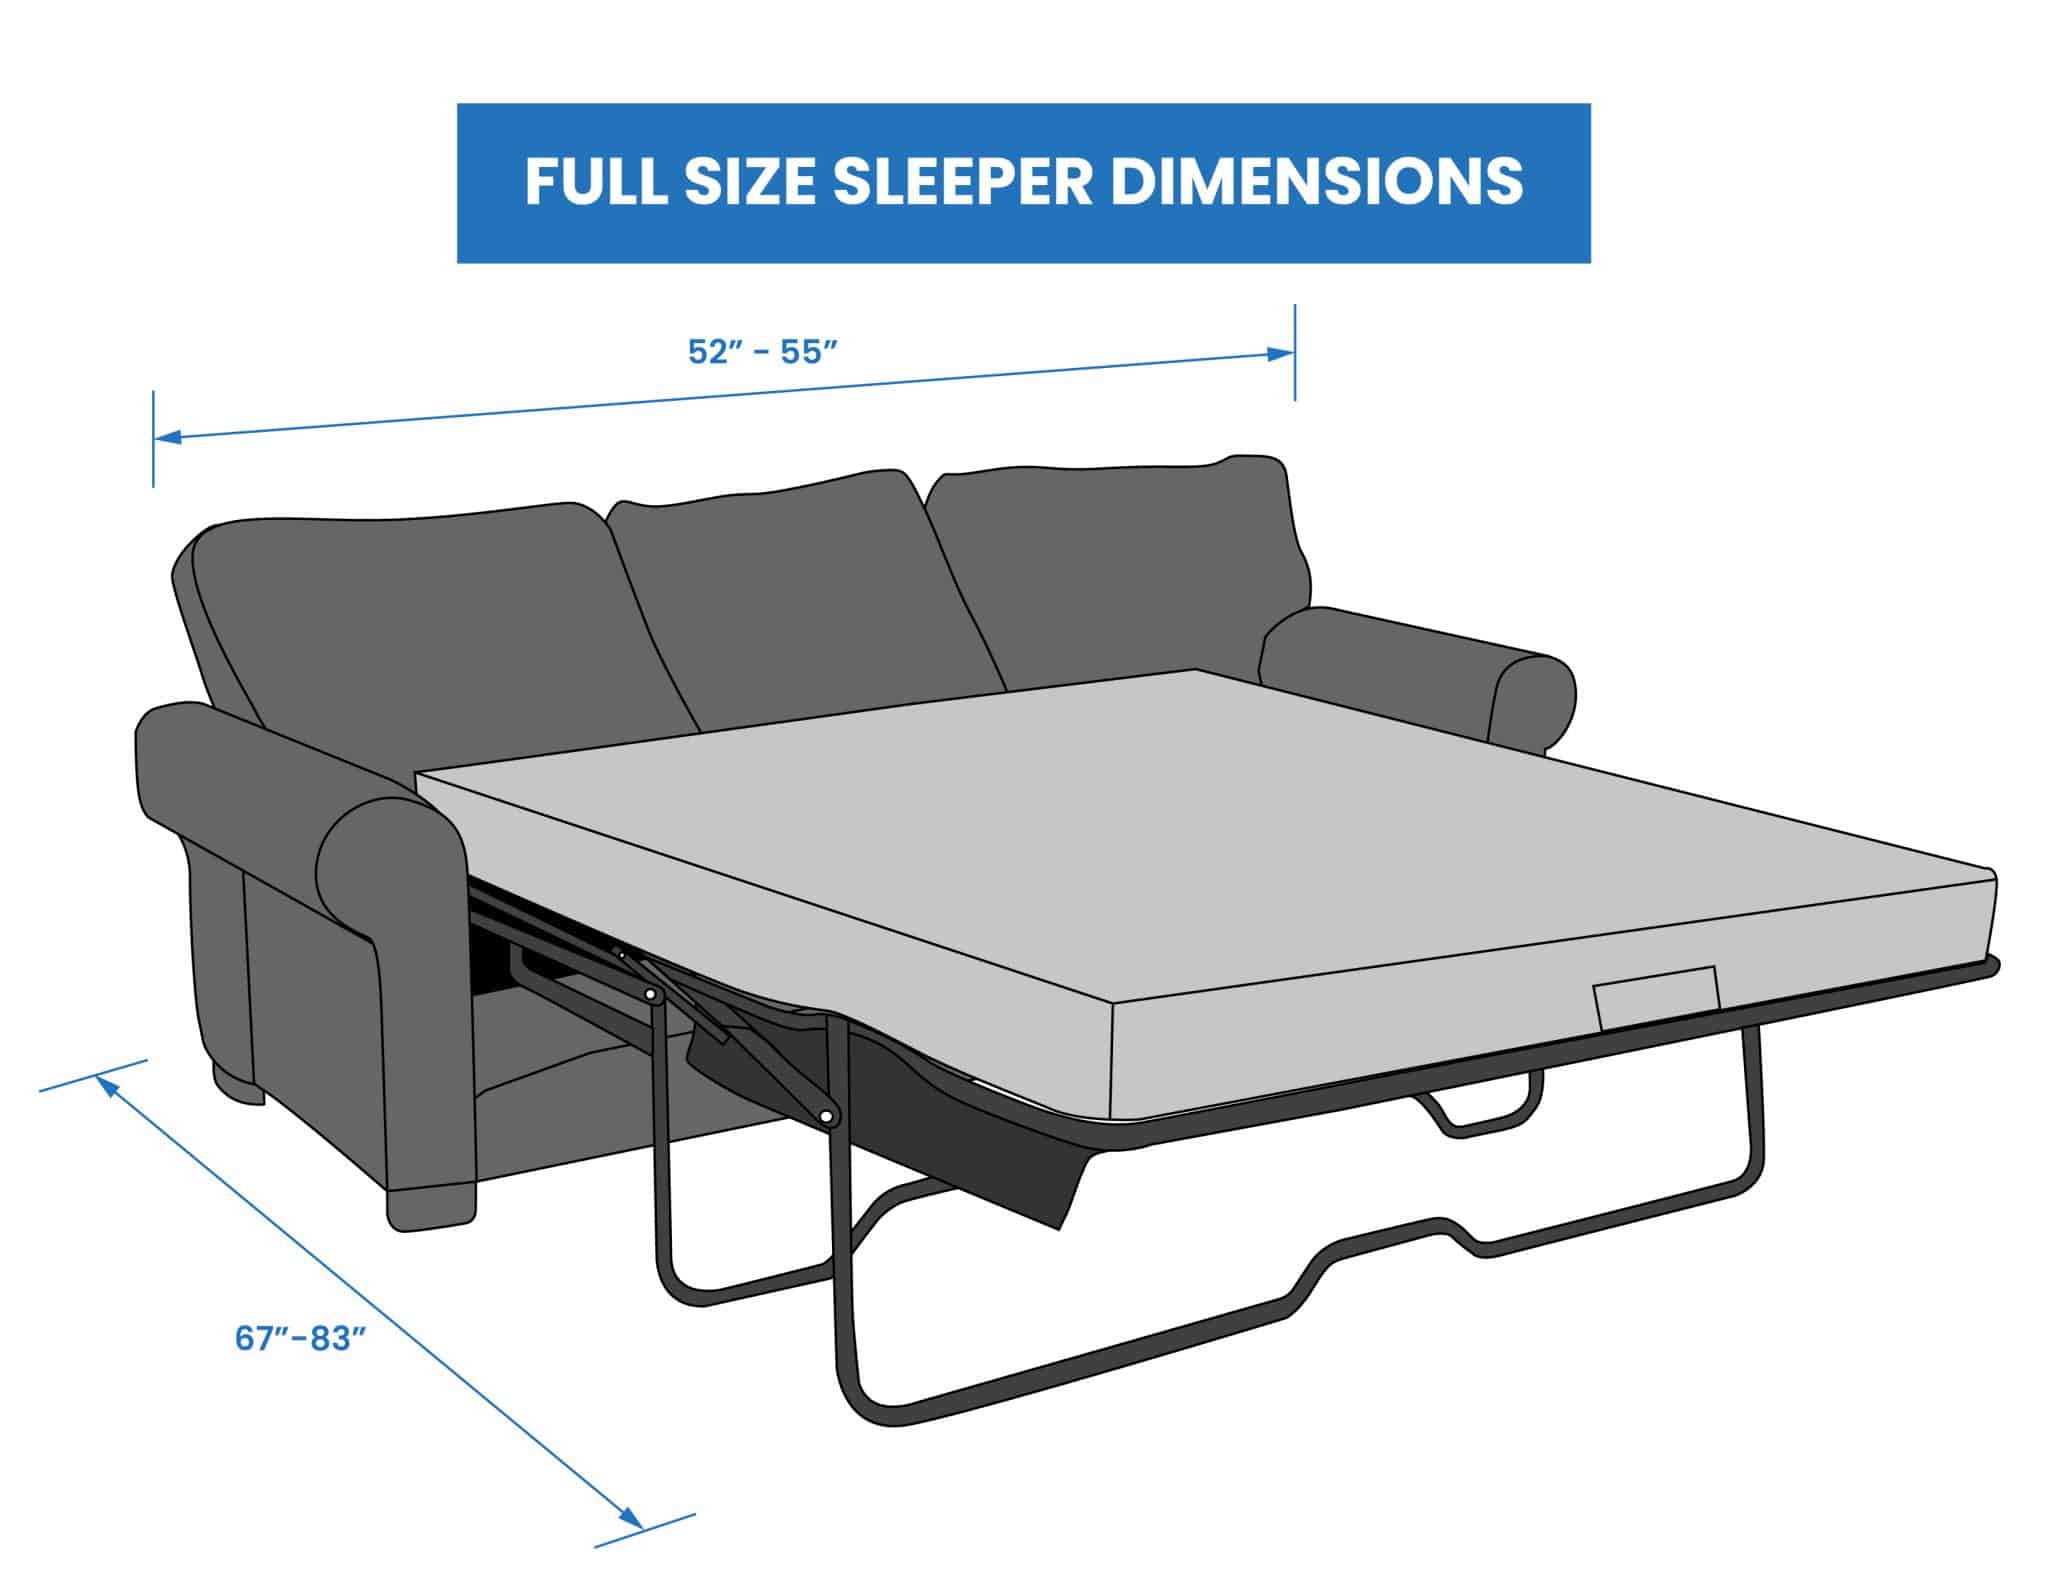 Full size sleeper sofa size